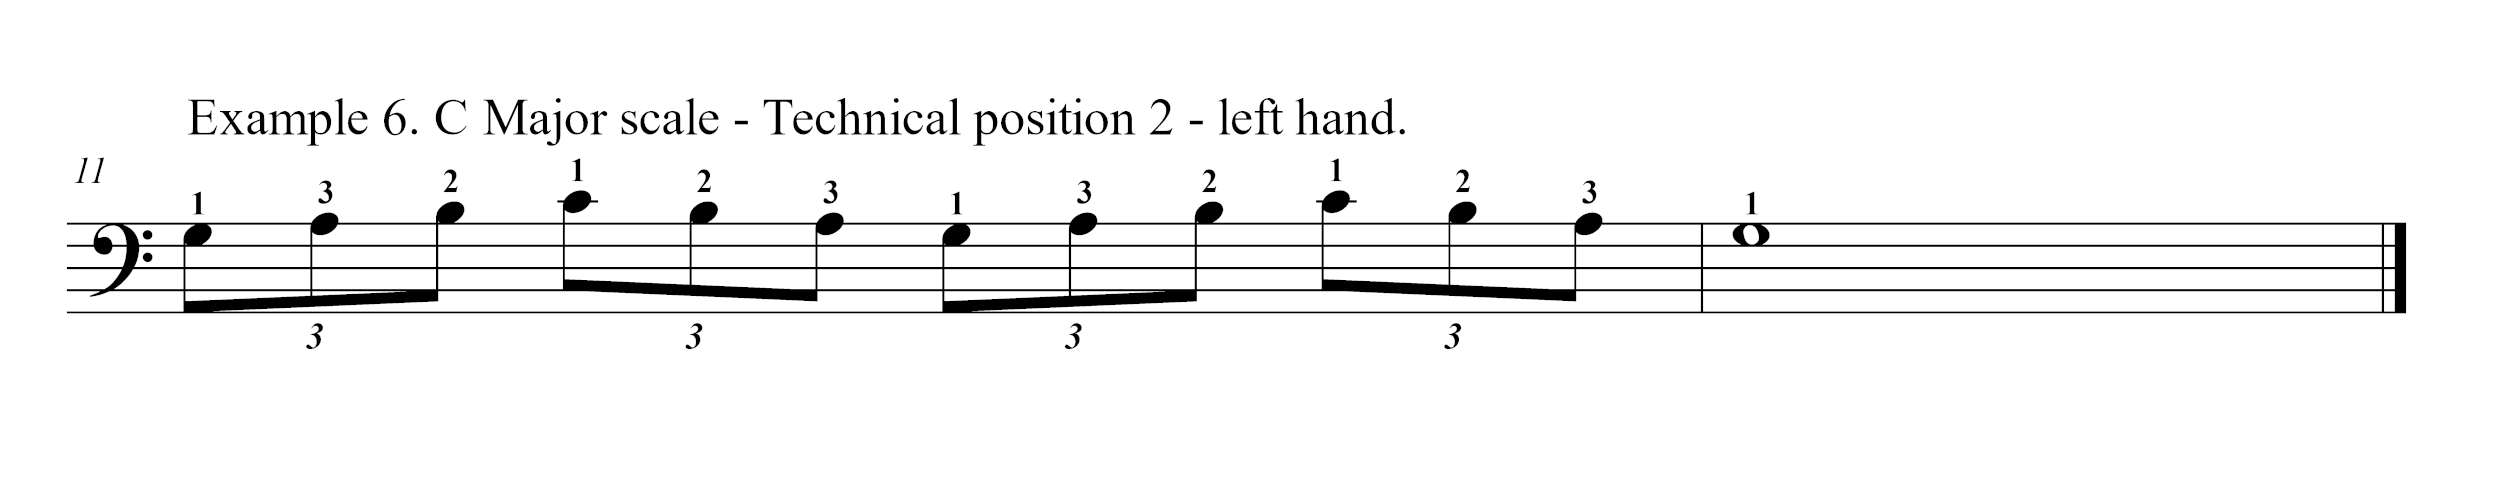 Technical position 2 left hand